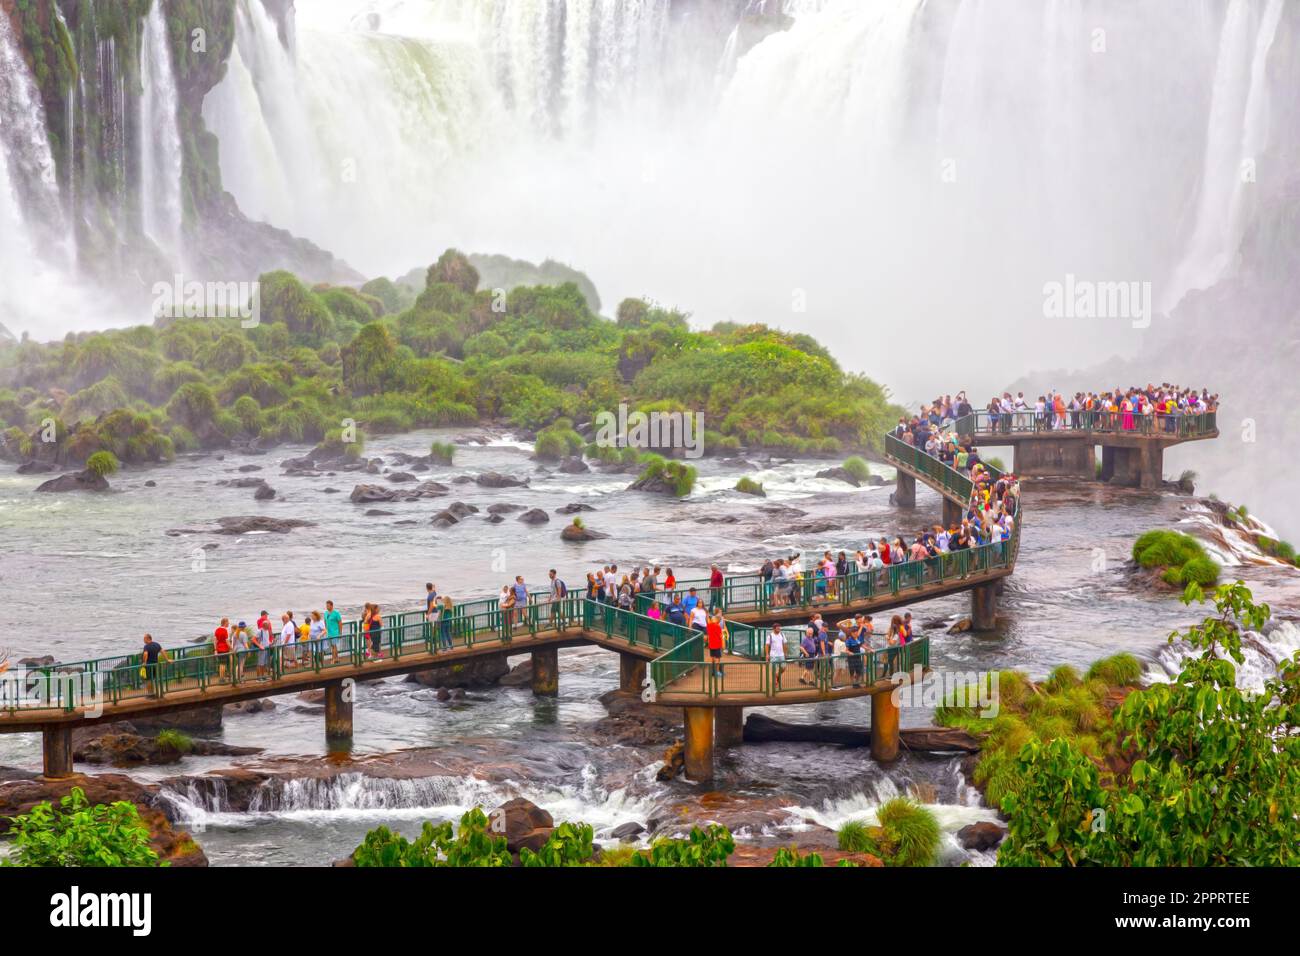 Tourists on Suspended Walkway Admiring Views of Garganta Del Diablo, or Devil's Throat, Famous Giant U-shaped Cascade in World Famous Iguazu Falls Stock Photo